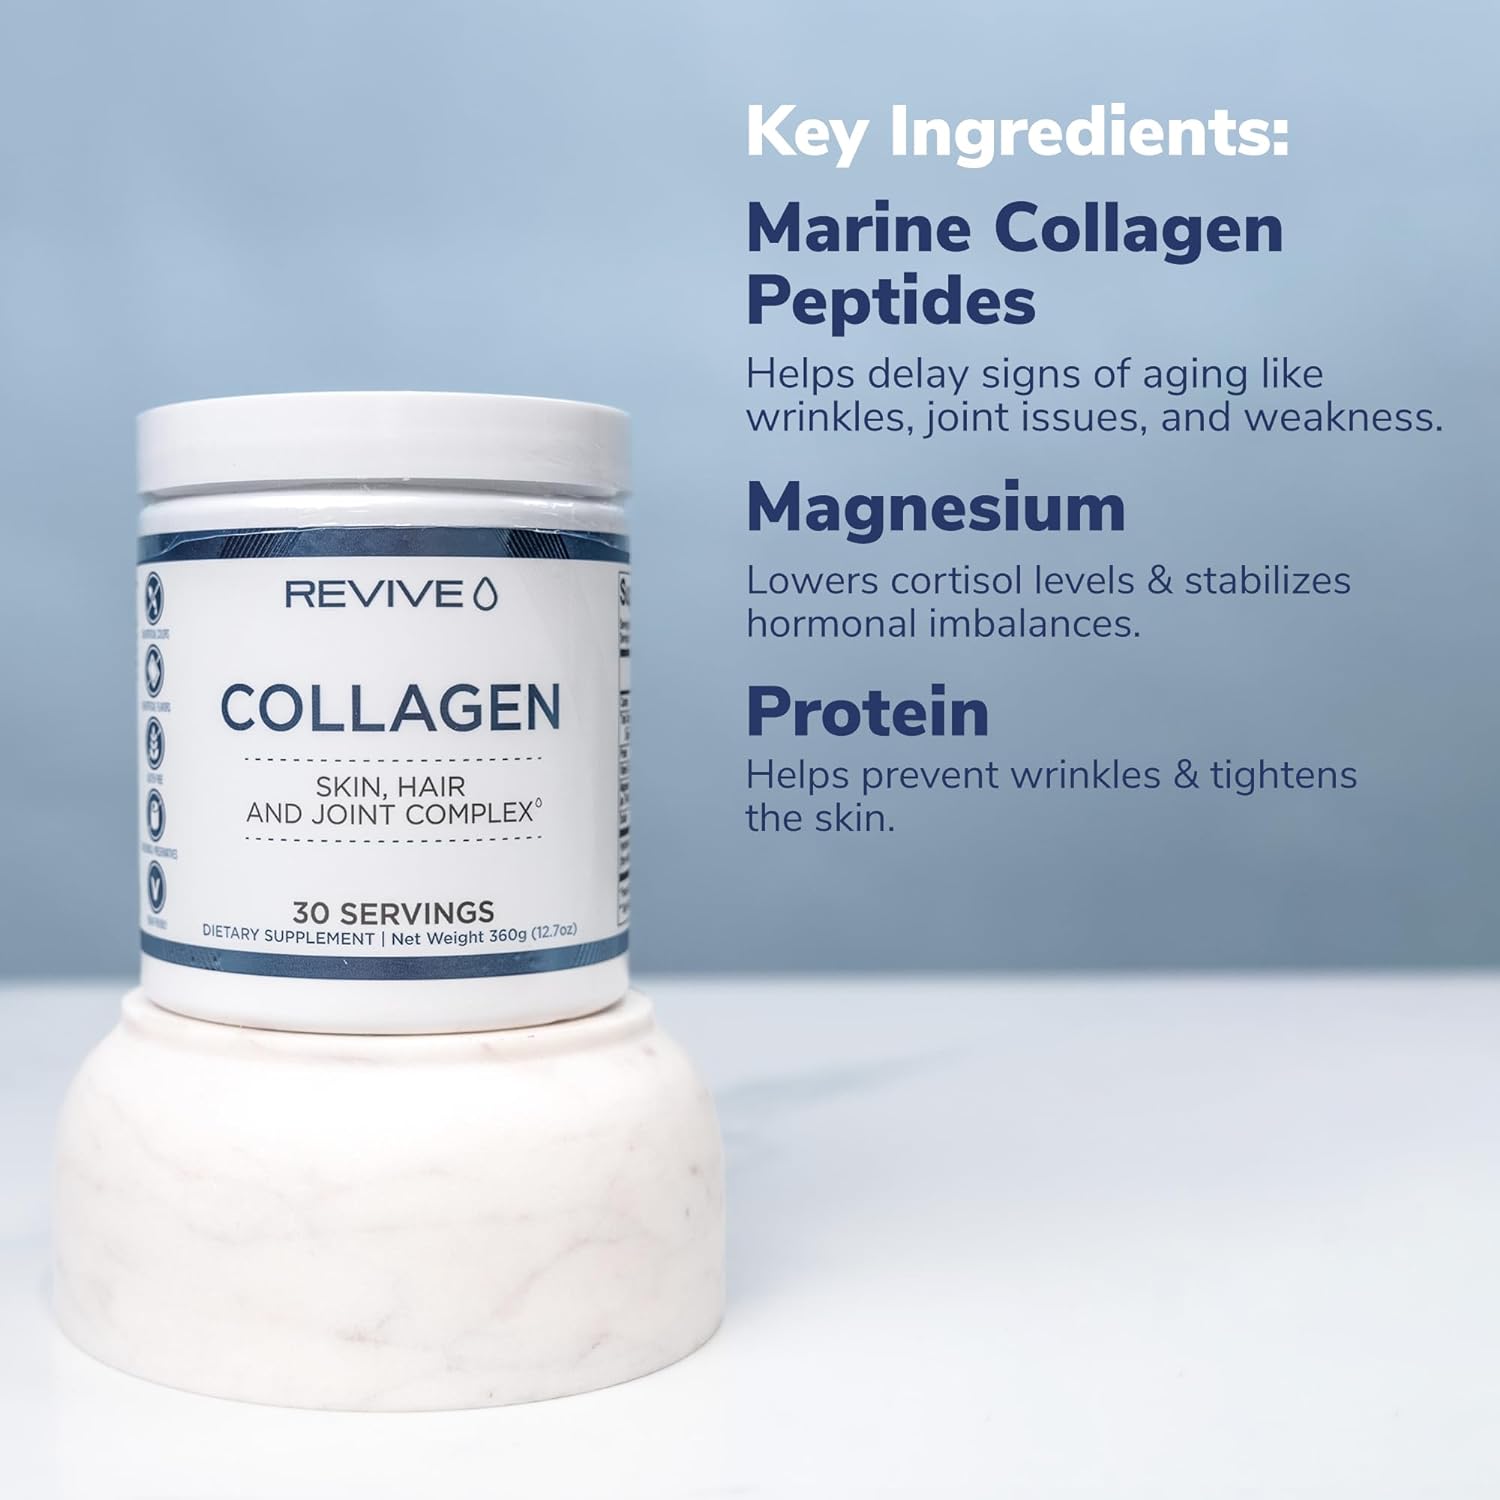 Collagen Powder | Buy 1 Get 1 50% Off Max Muscle Orlando